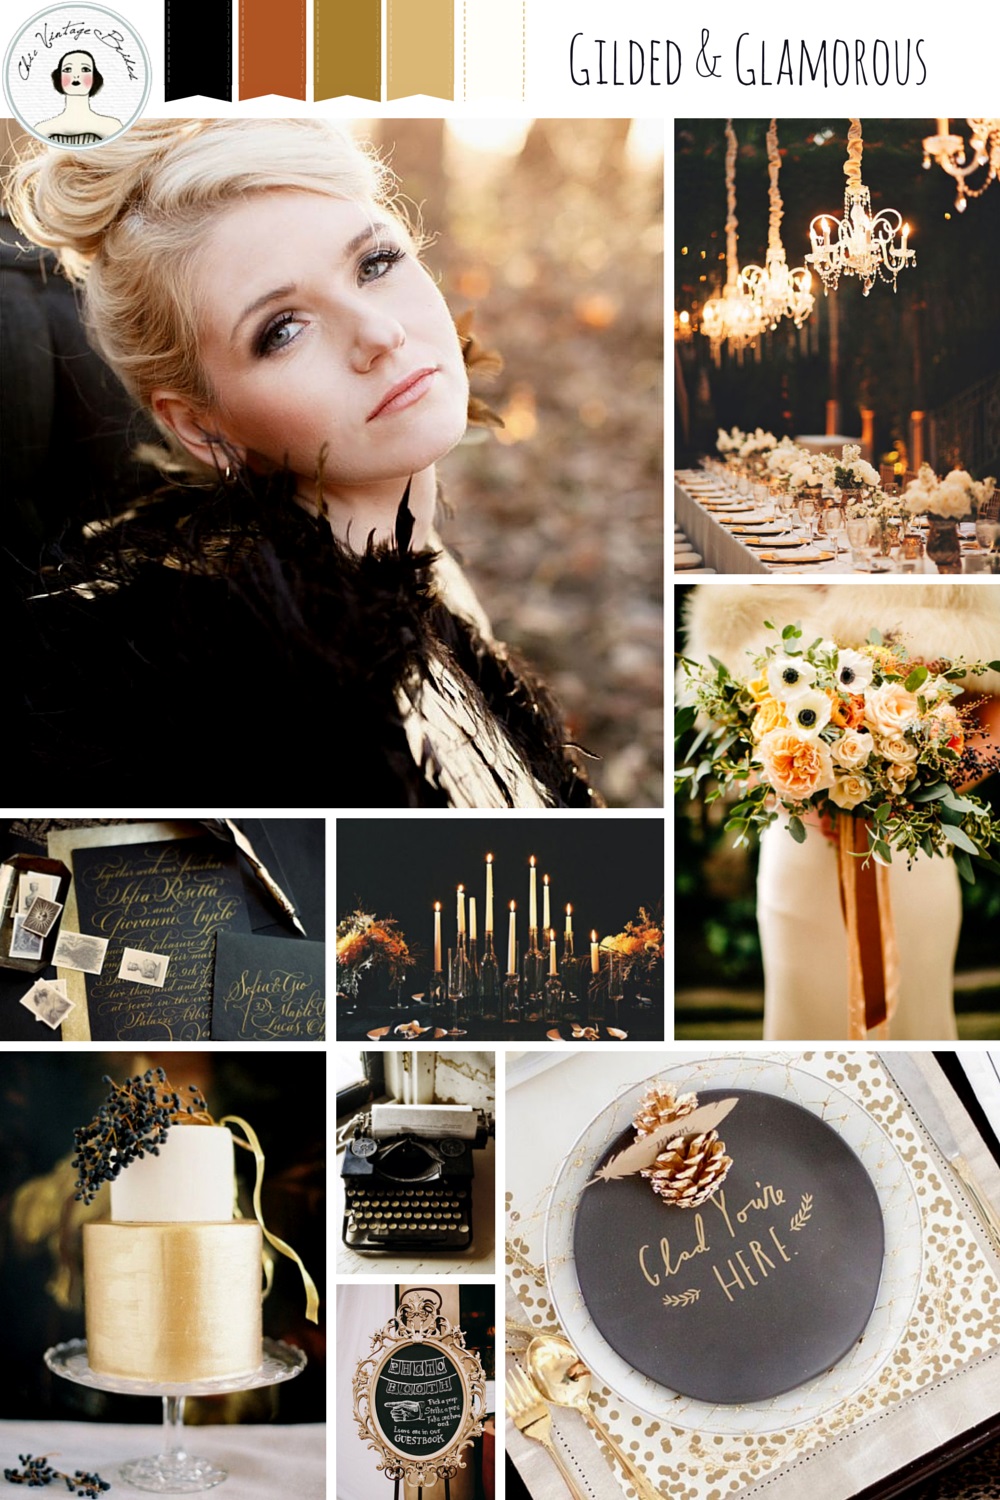 Gilded & Glamorous - Black & Gold Halloween Wedding Inspiration Board